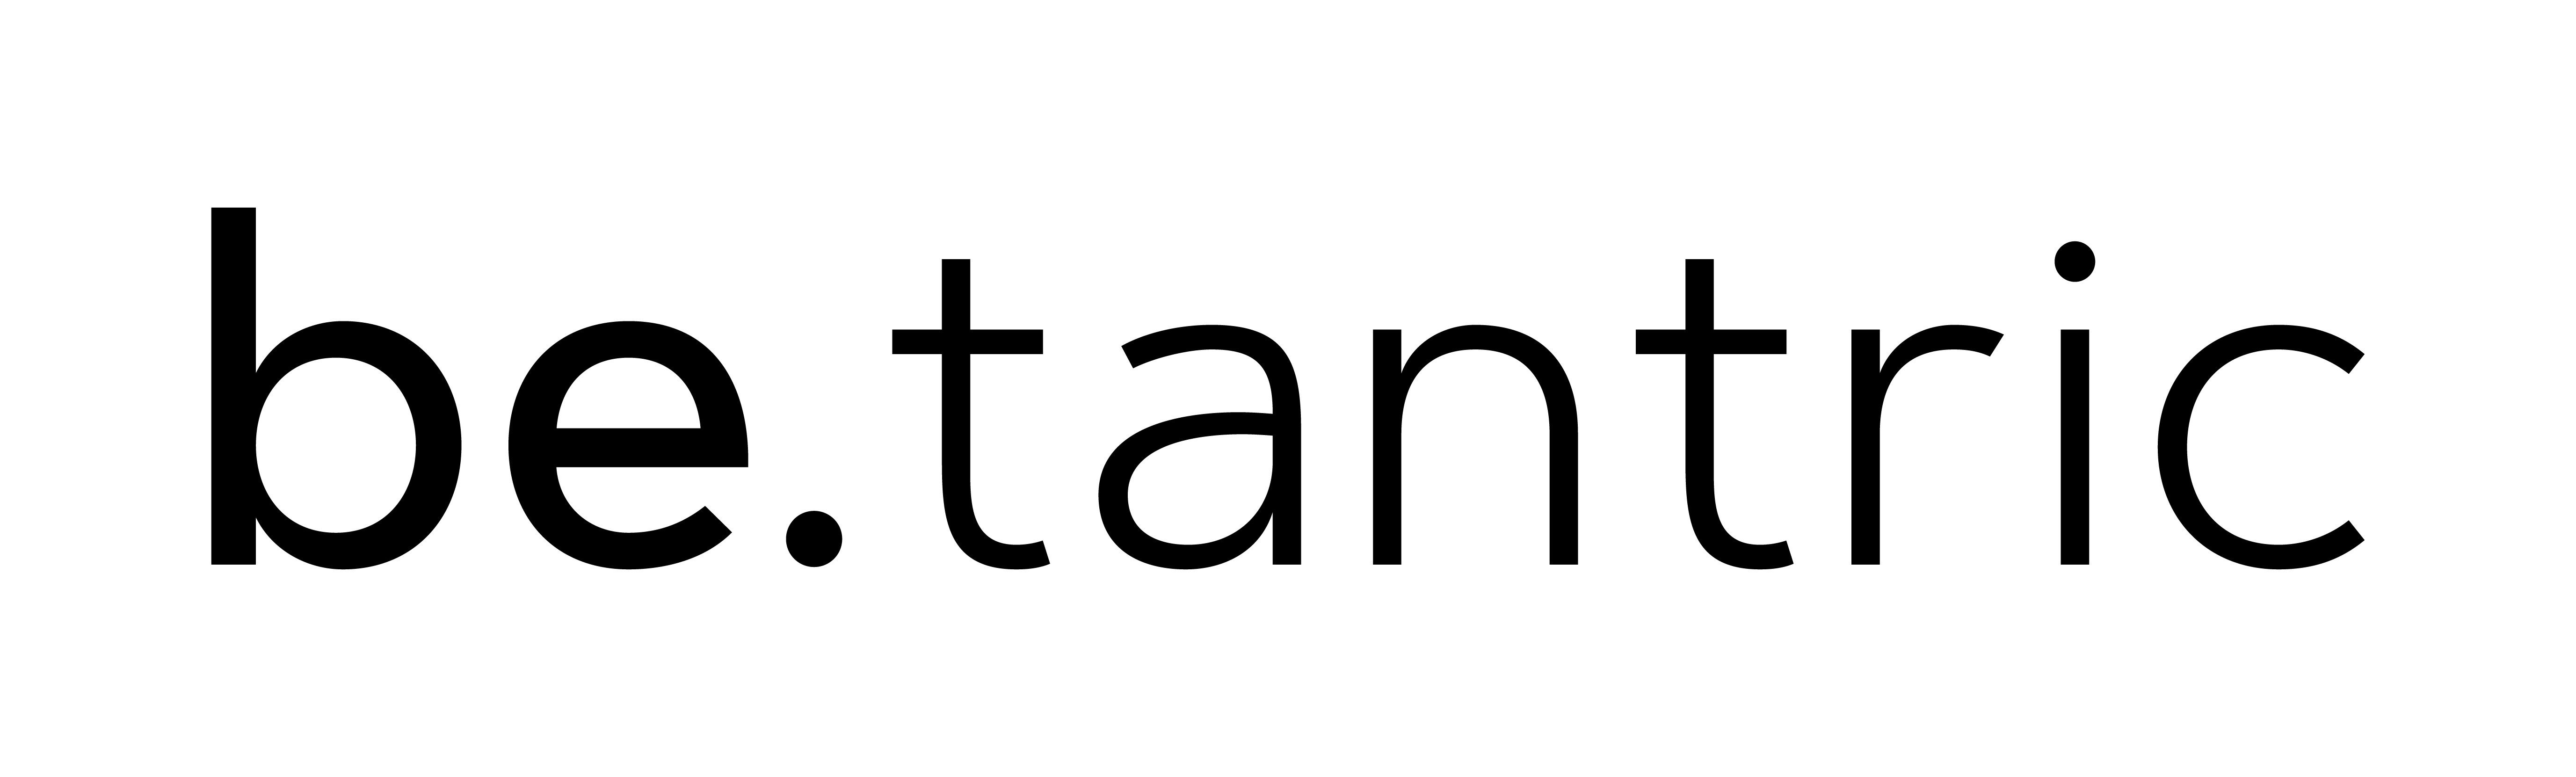 betantric logo_black-01